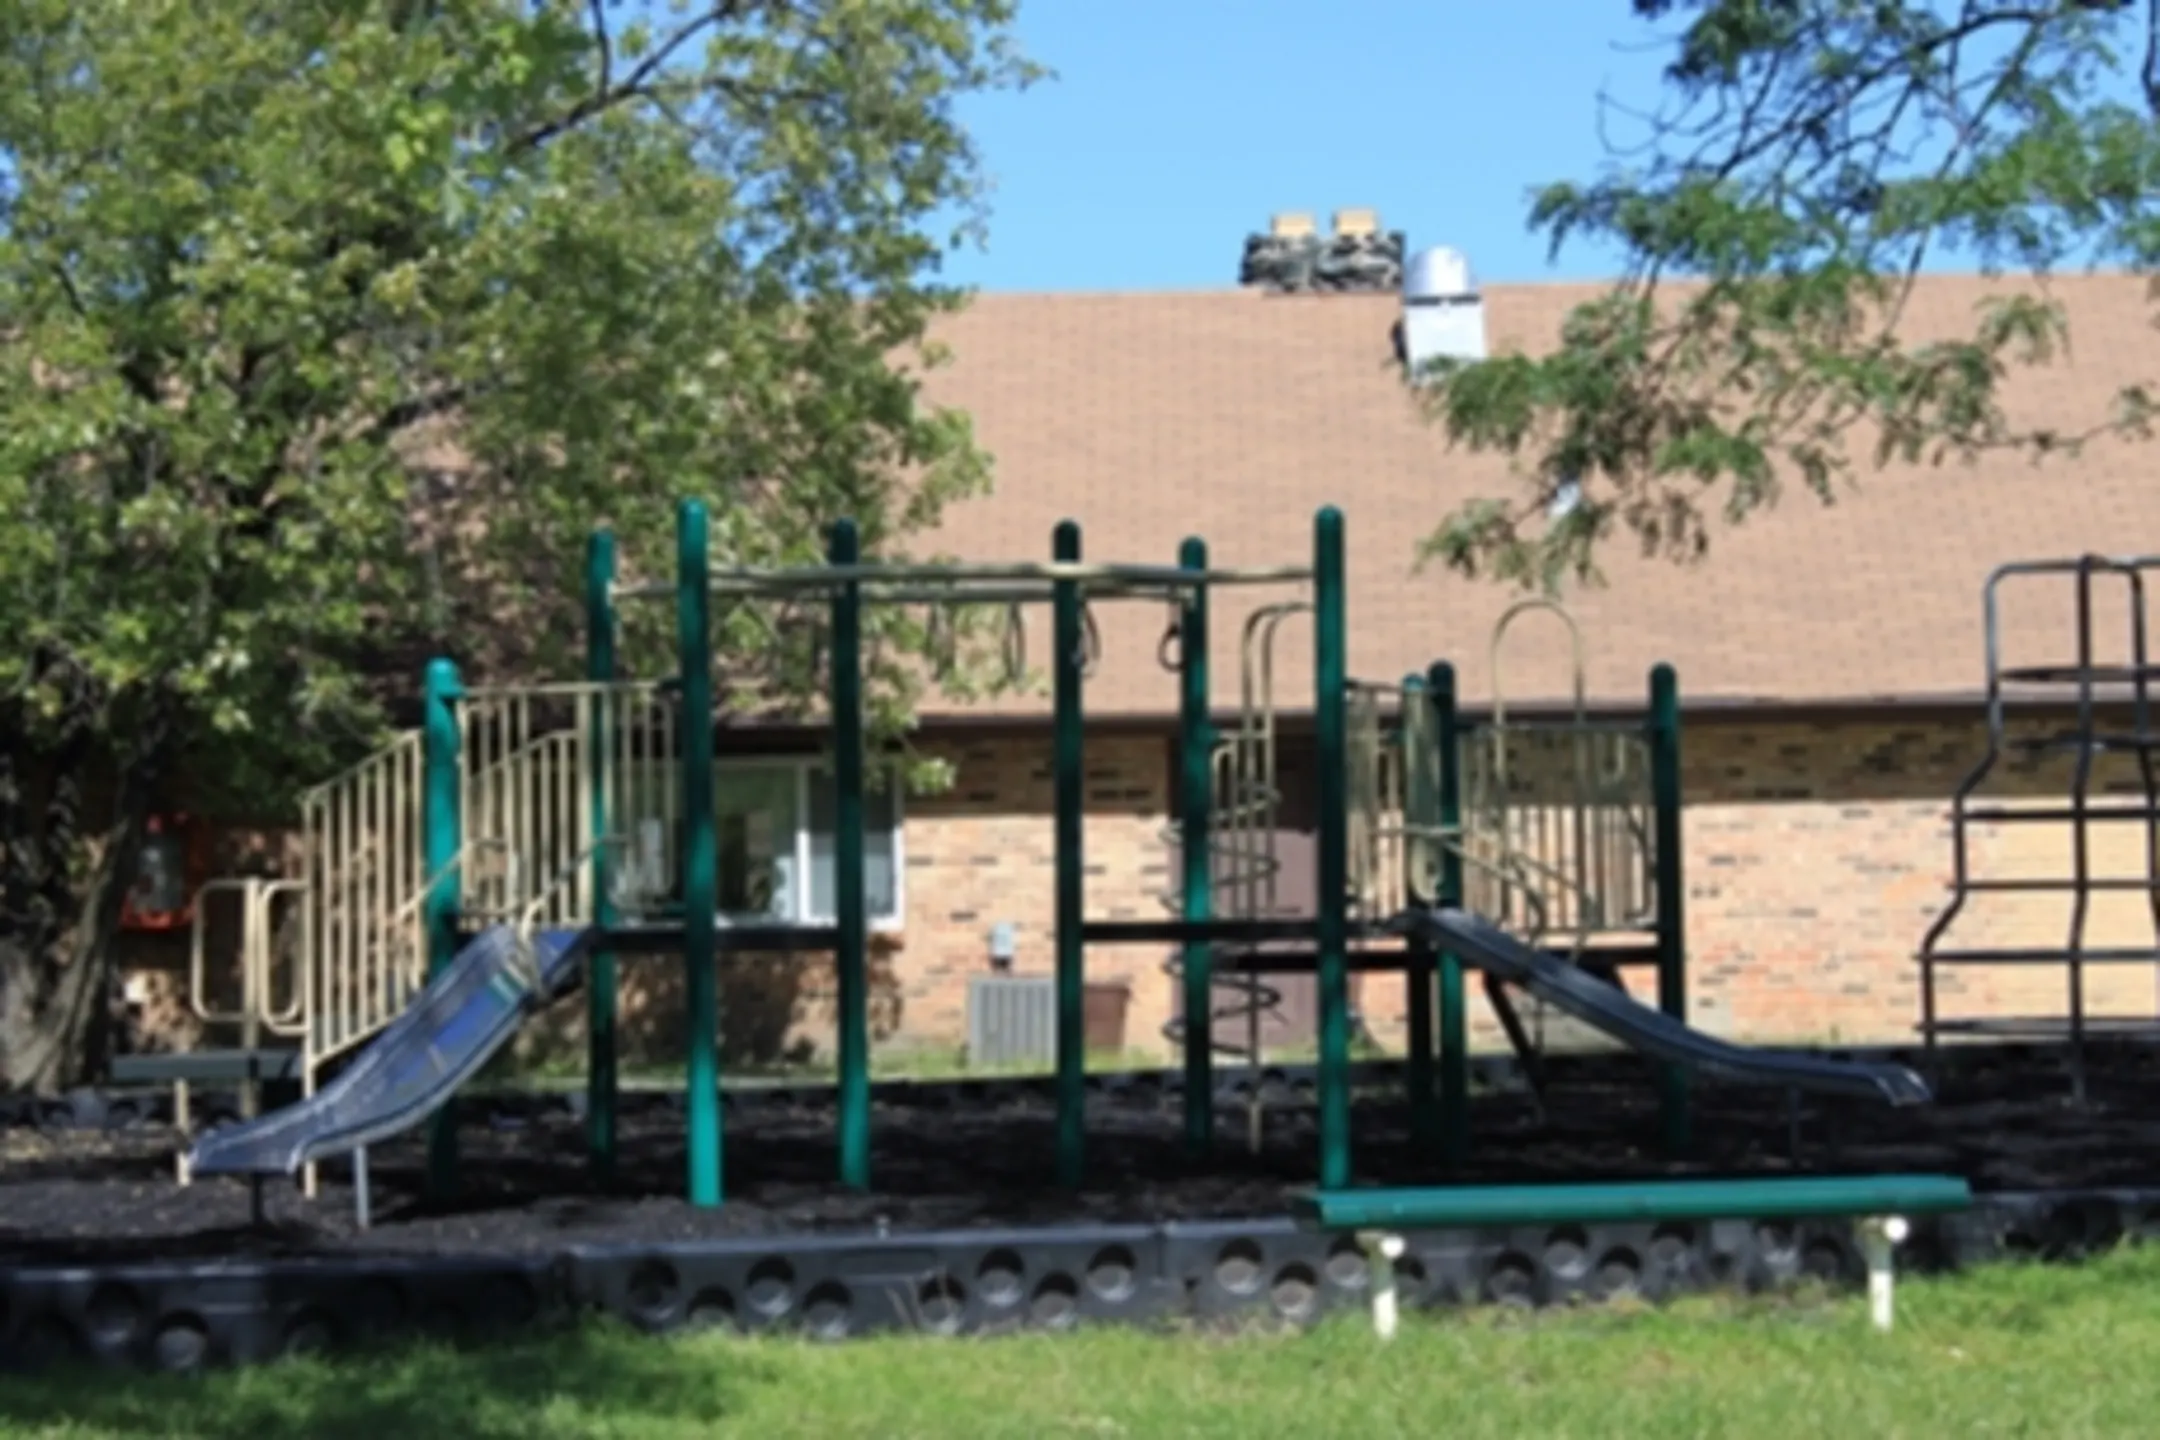 Playground - Param Apartments - Villa Park, IL